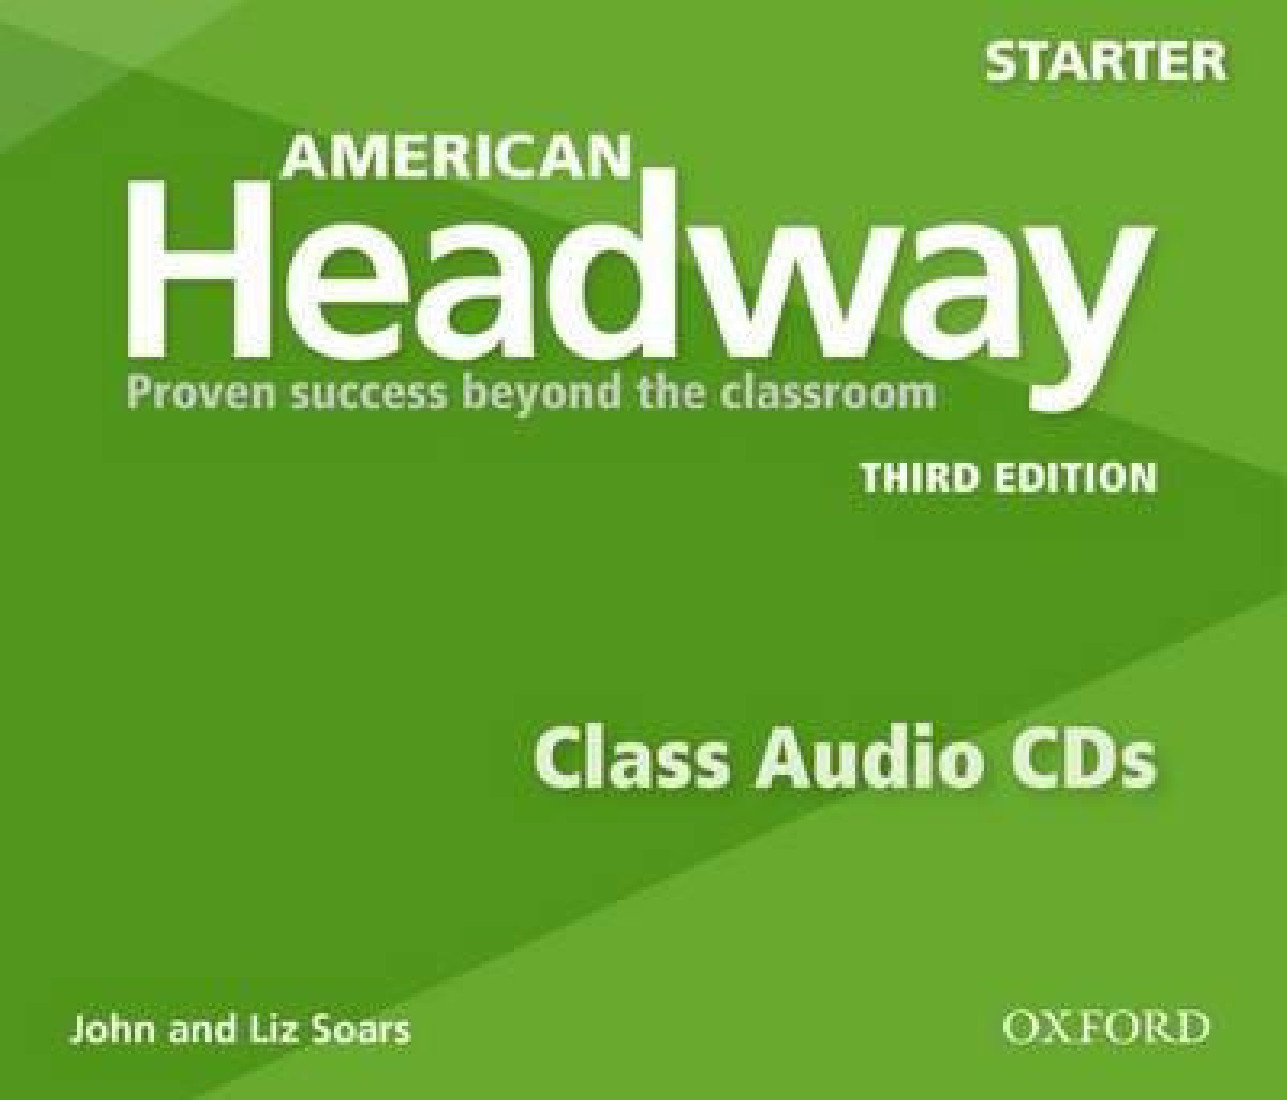 AMERICAN HEADWAY STARTER CD CLASS